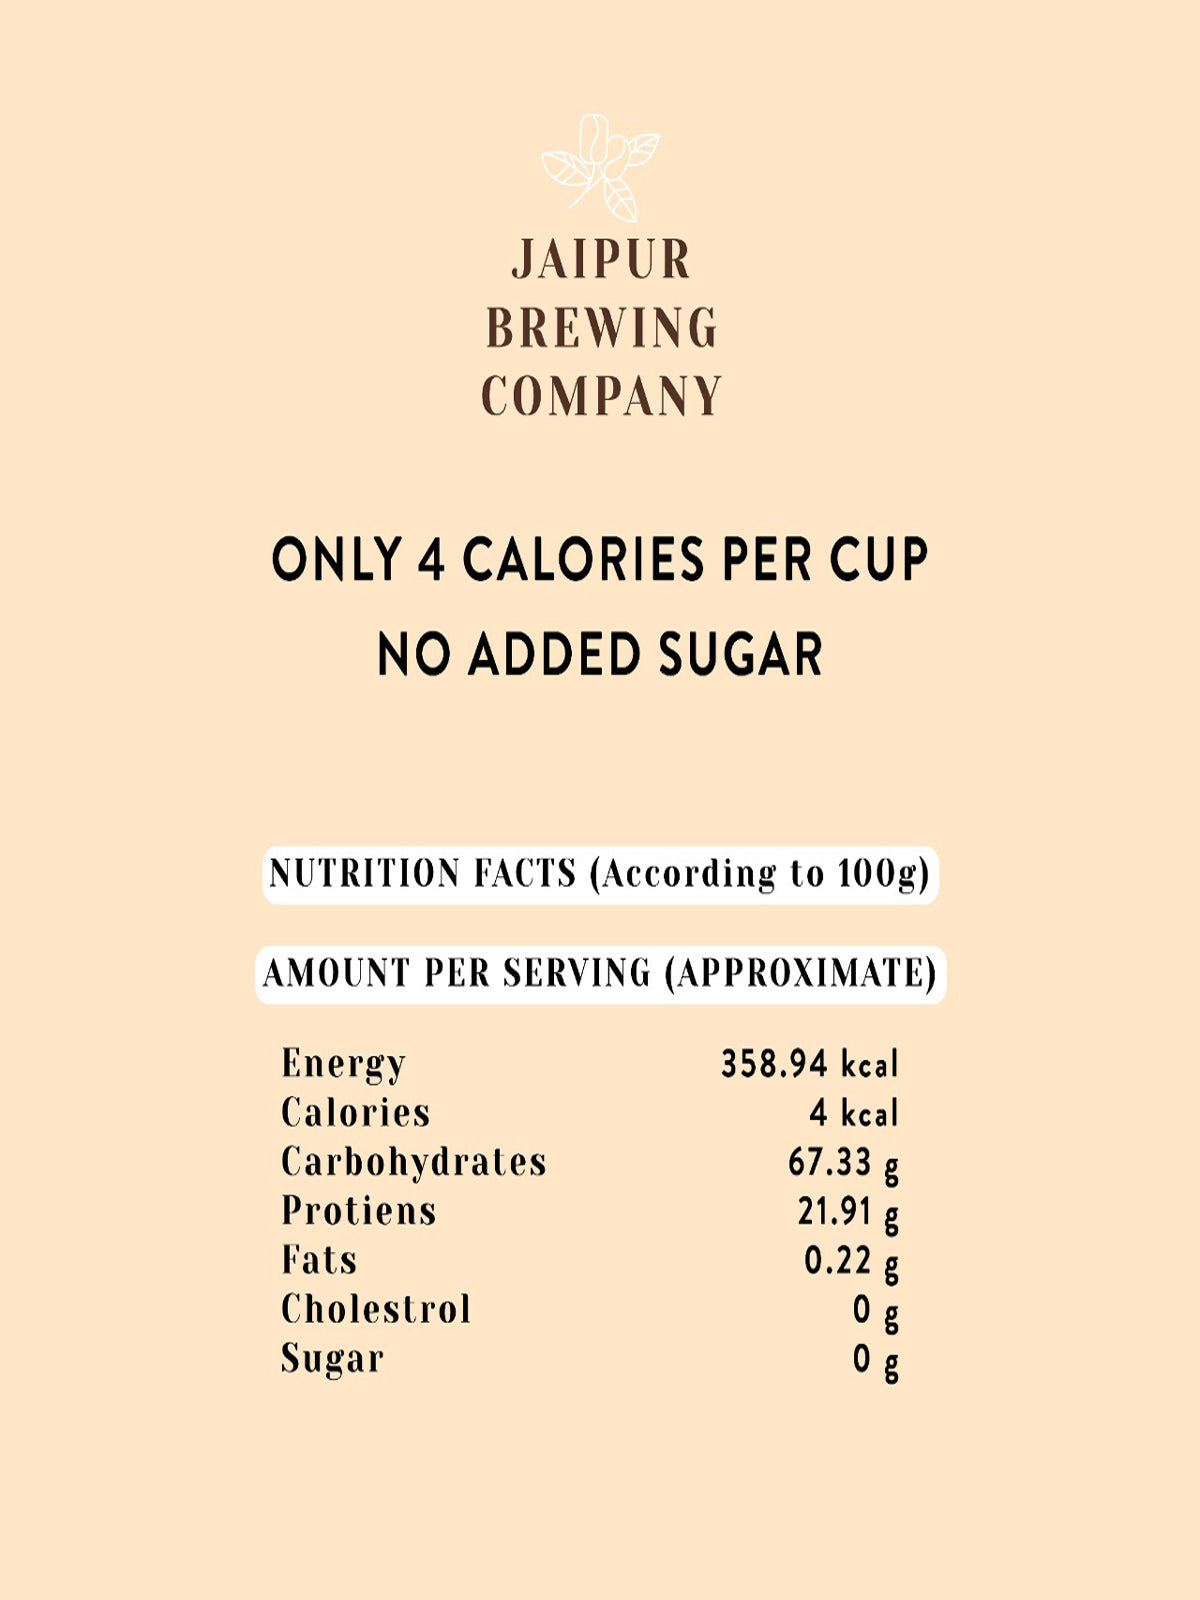 Jaipur Brewing Company Caramel Flavoured Instant Coffee Powder 60 g